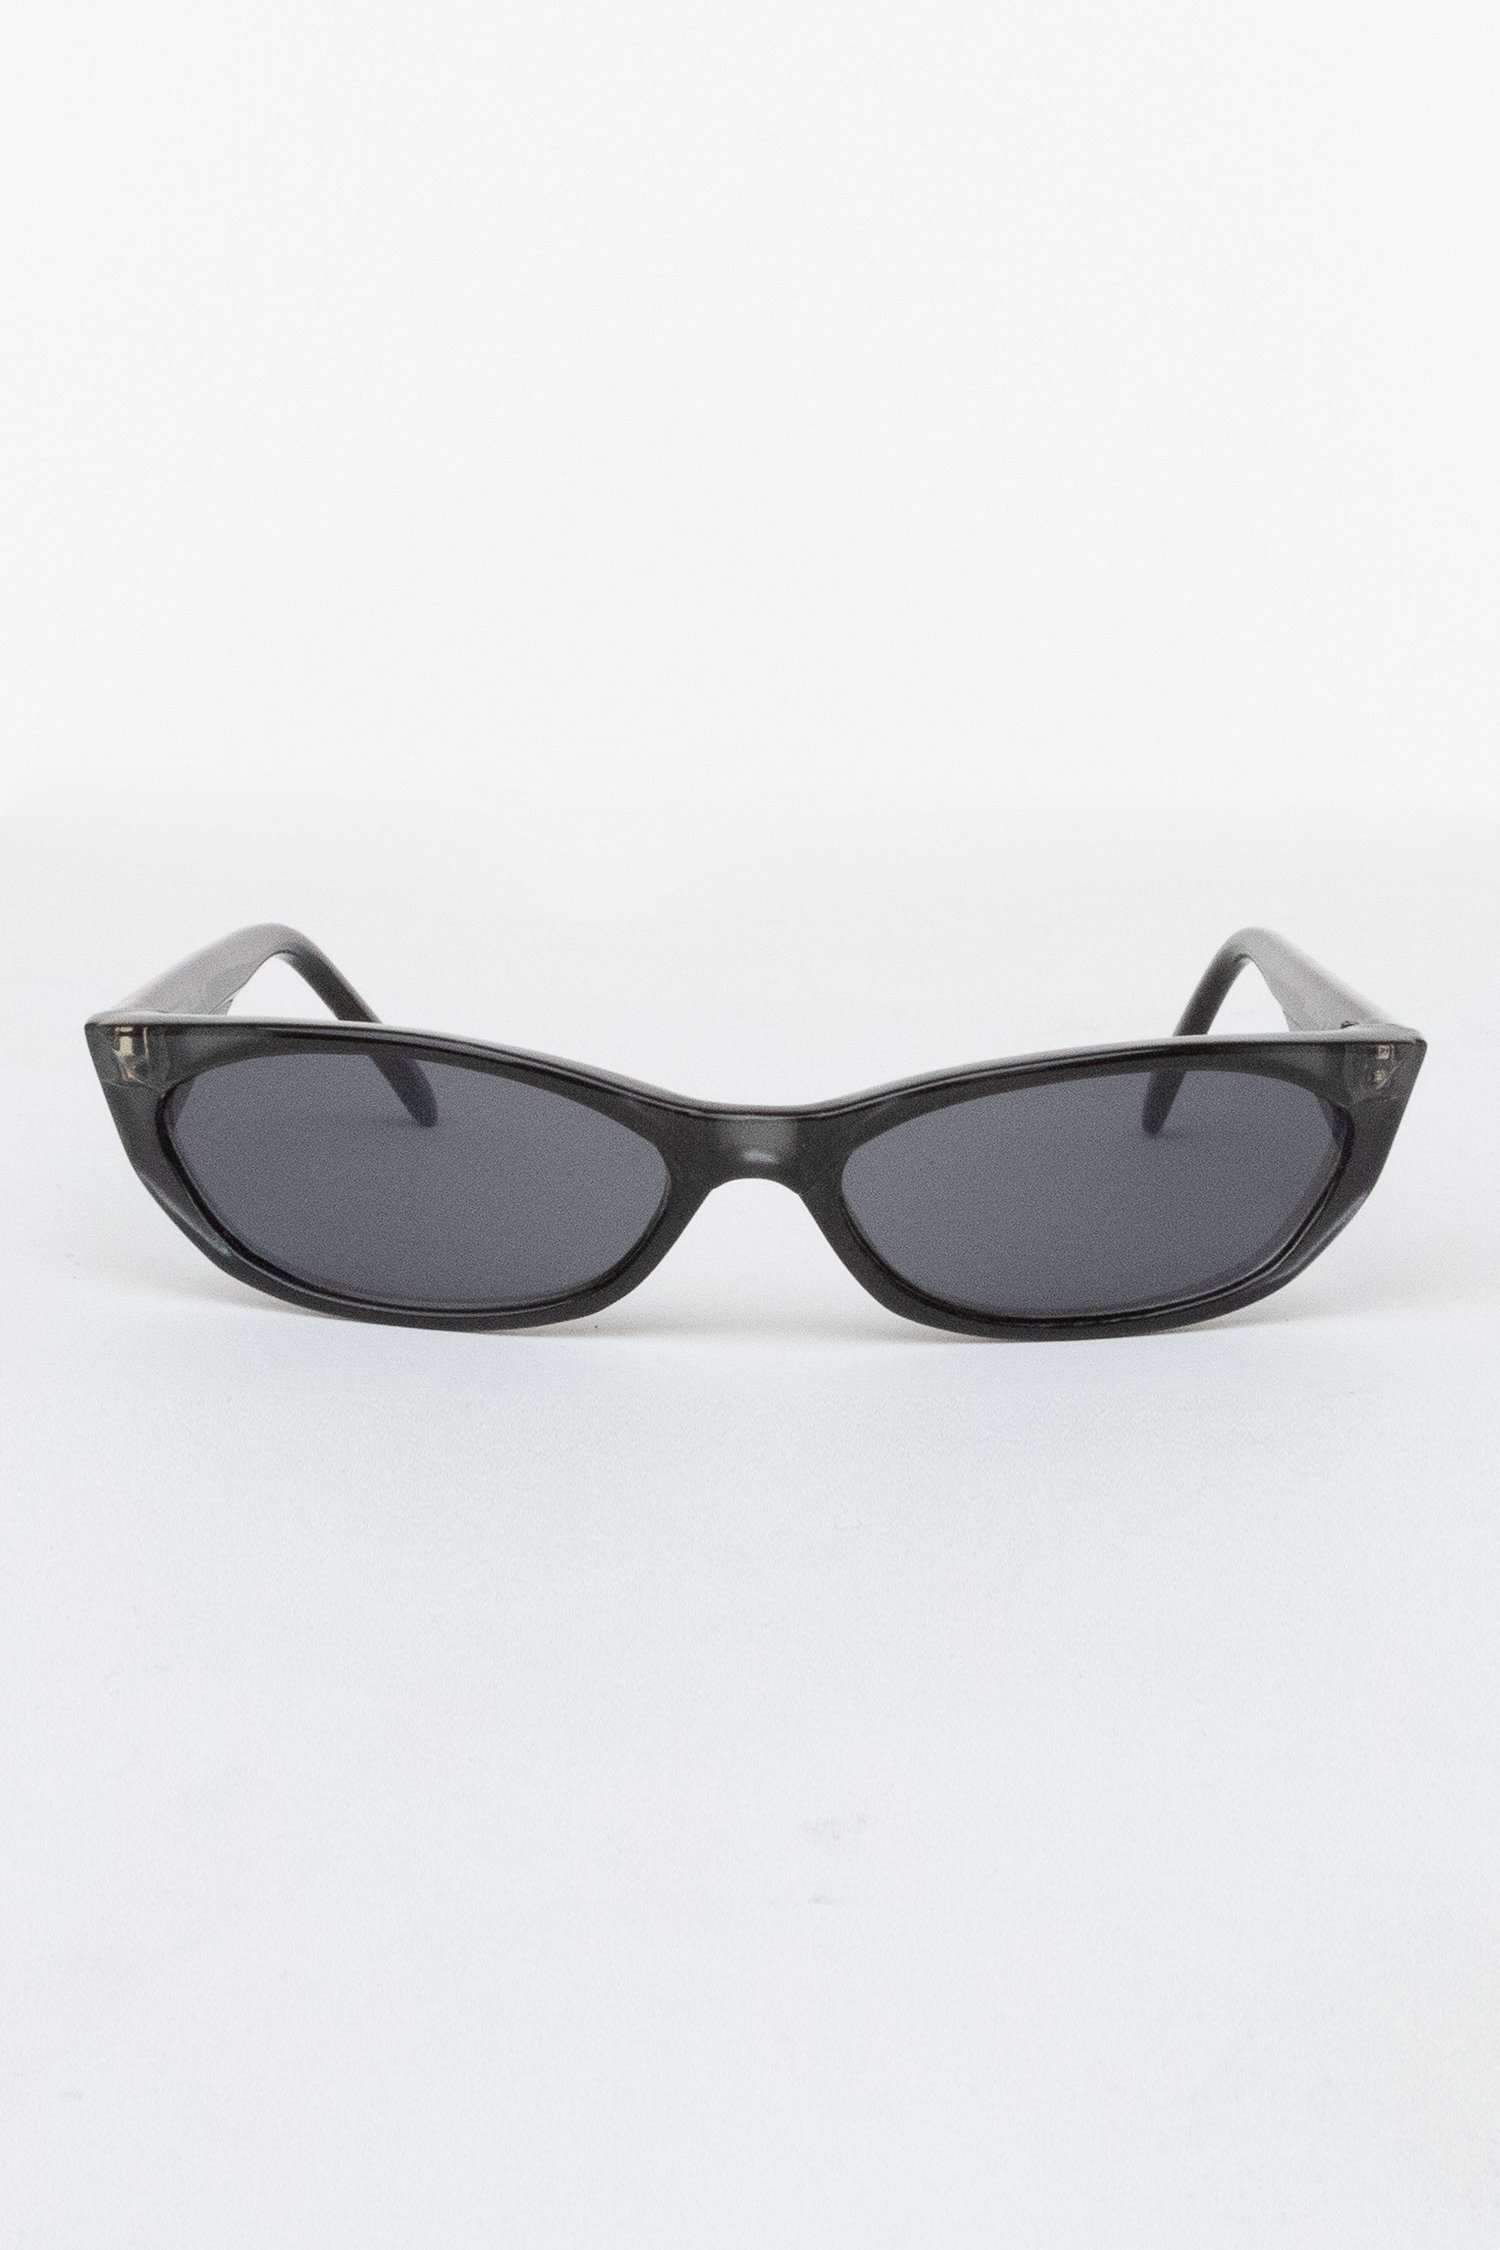 SGSKCAT - Katya Skinny Cat Eye Sunglasses Sunglasses Los Angeles Apparel Black OS 